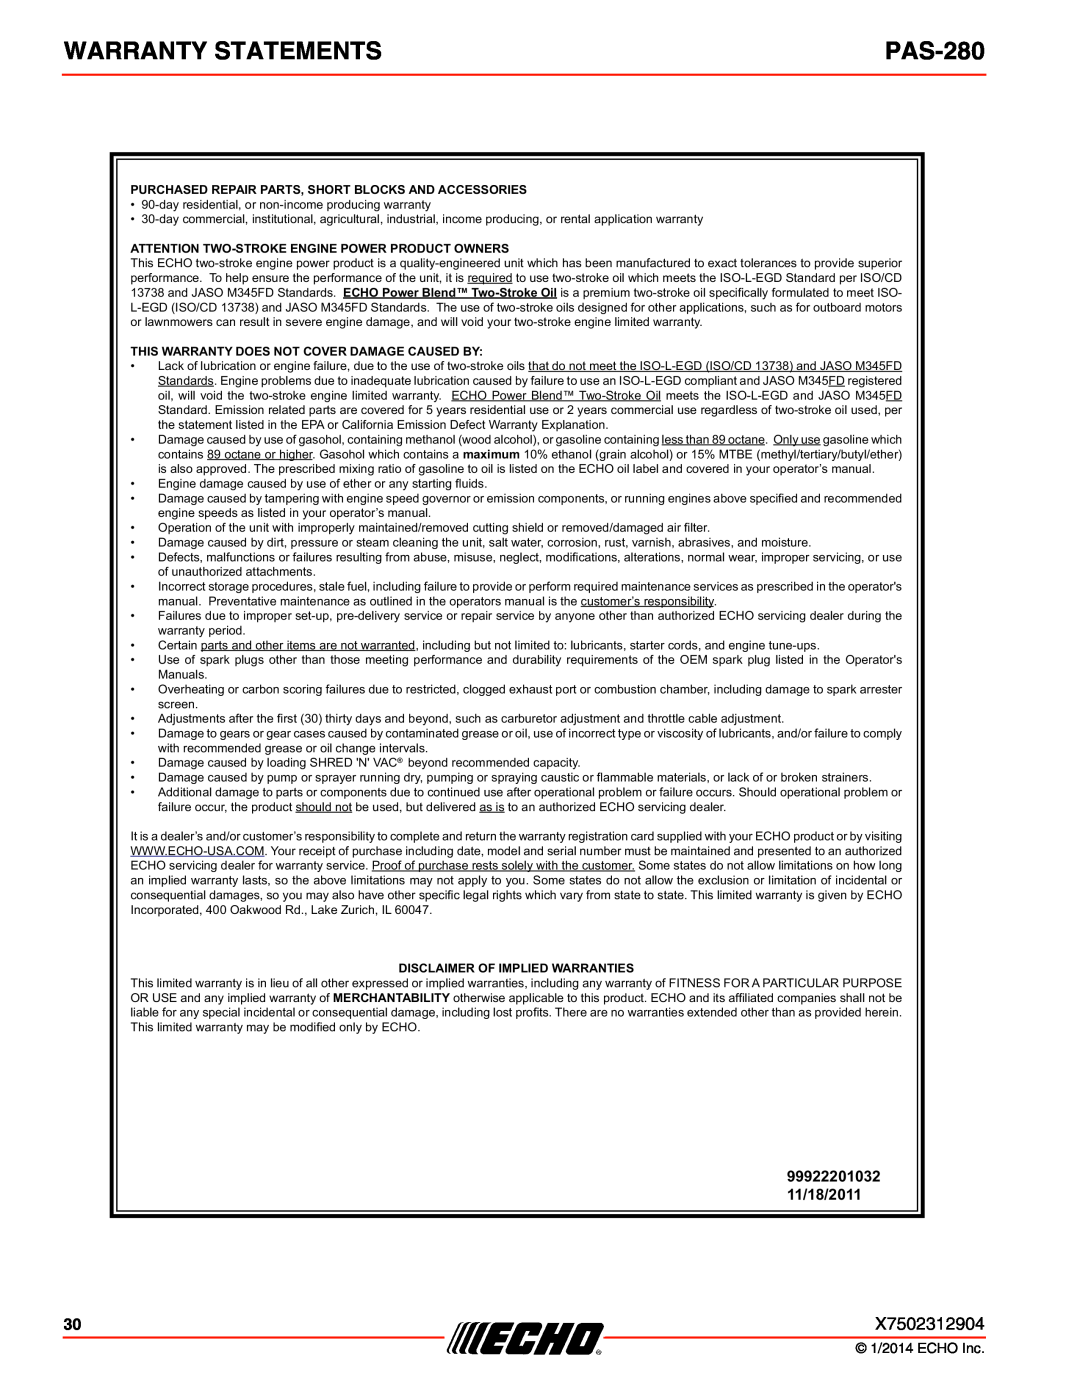 Echo PAS-280 specifications Warranty Statements, 99922201032 11/18/2011 